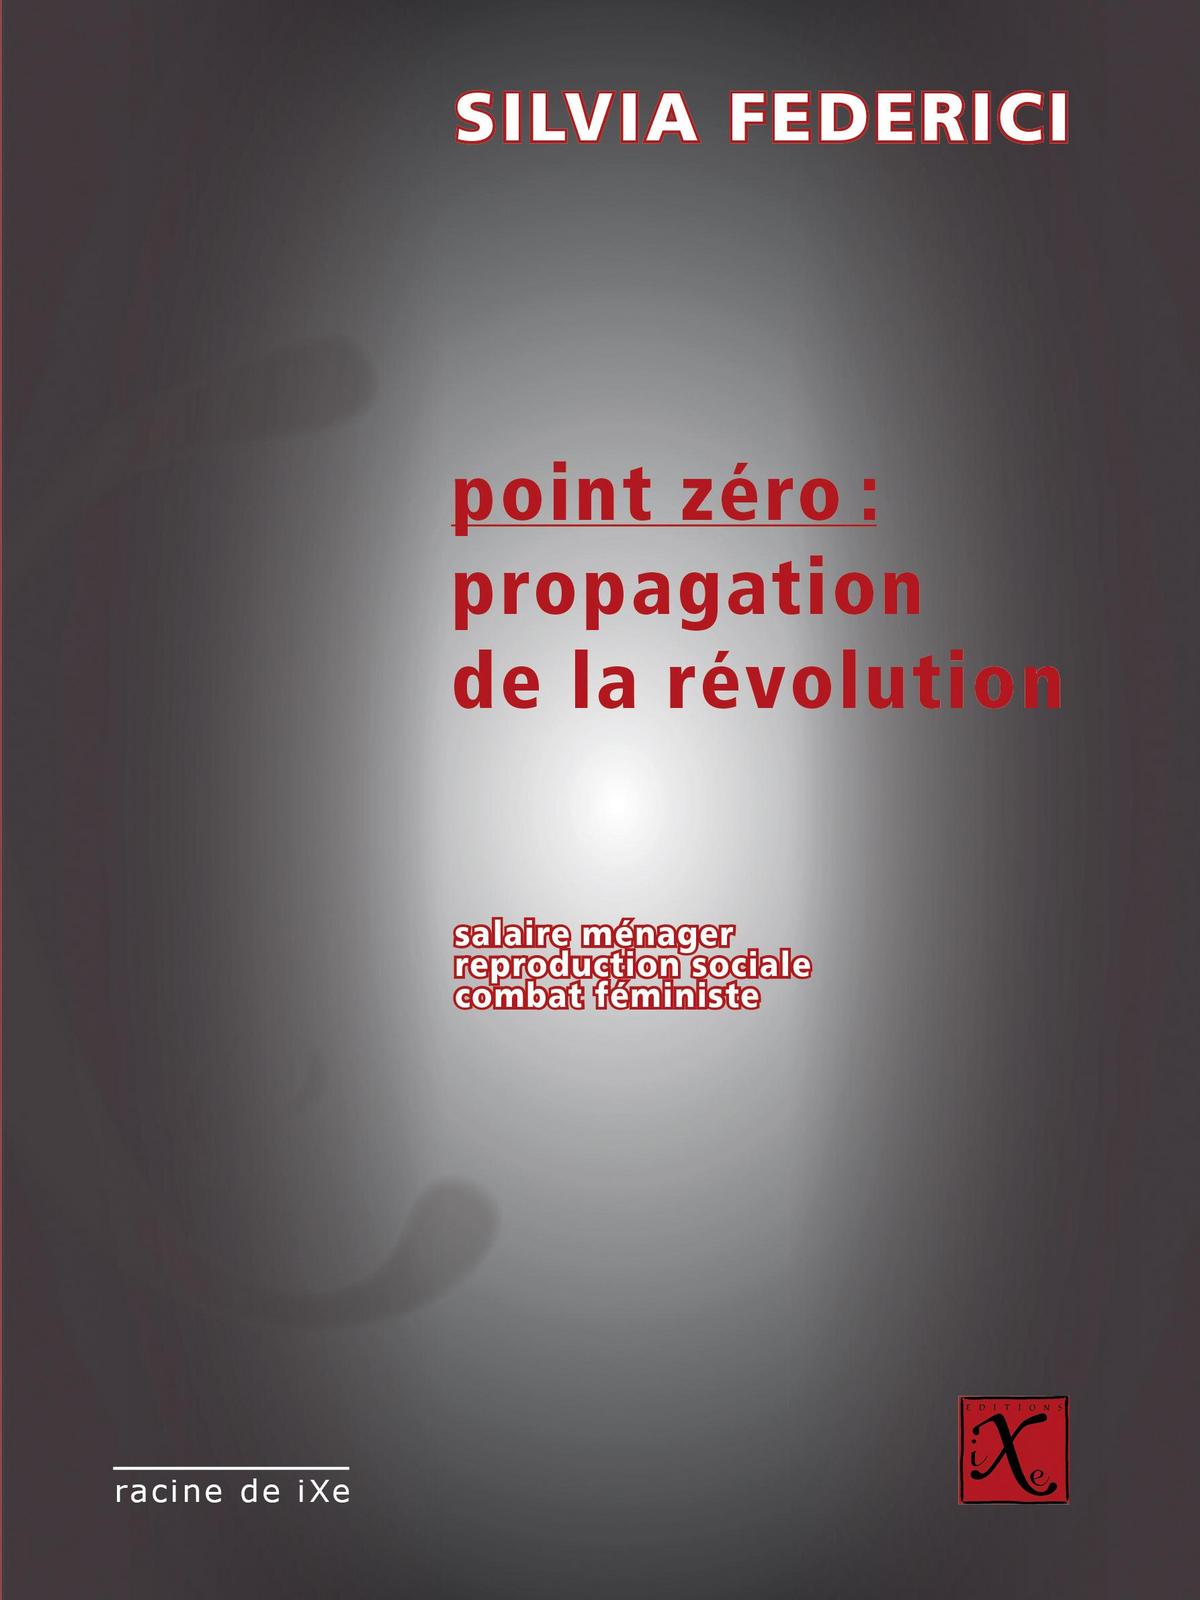 Silvia Federici: Point zéro, propagation de la révolution (French language)